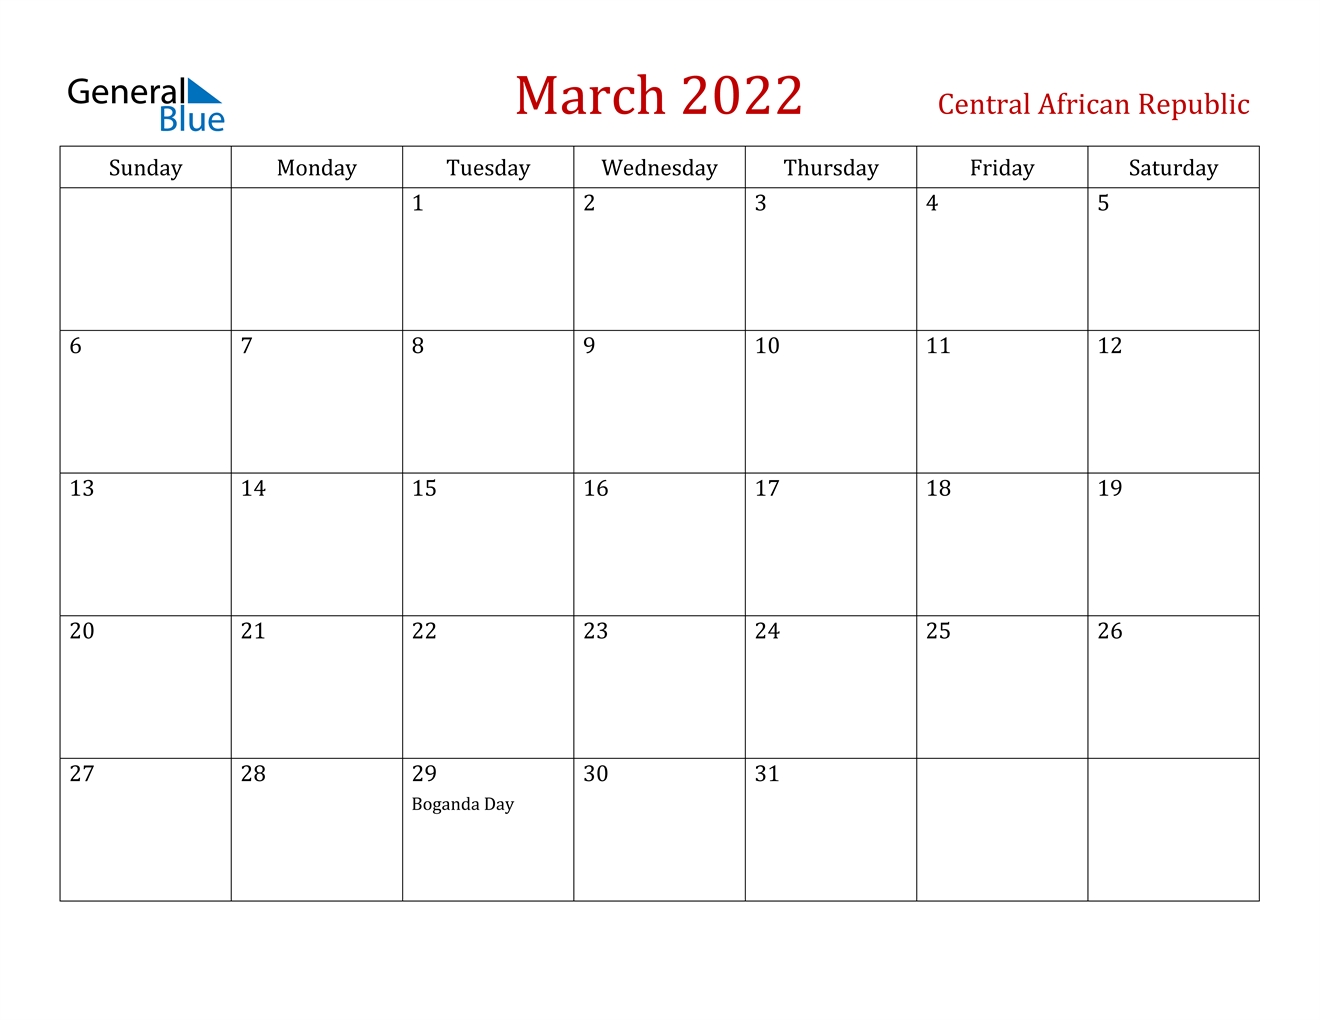 March 2022 Calendar - Central African Republic